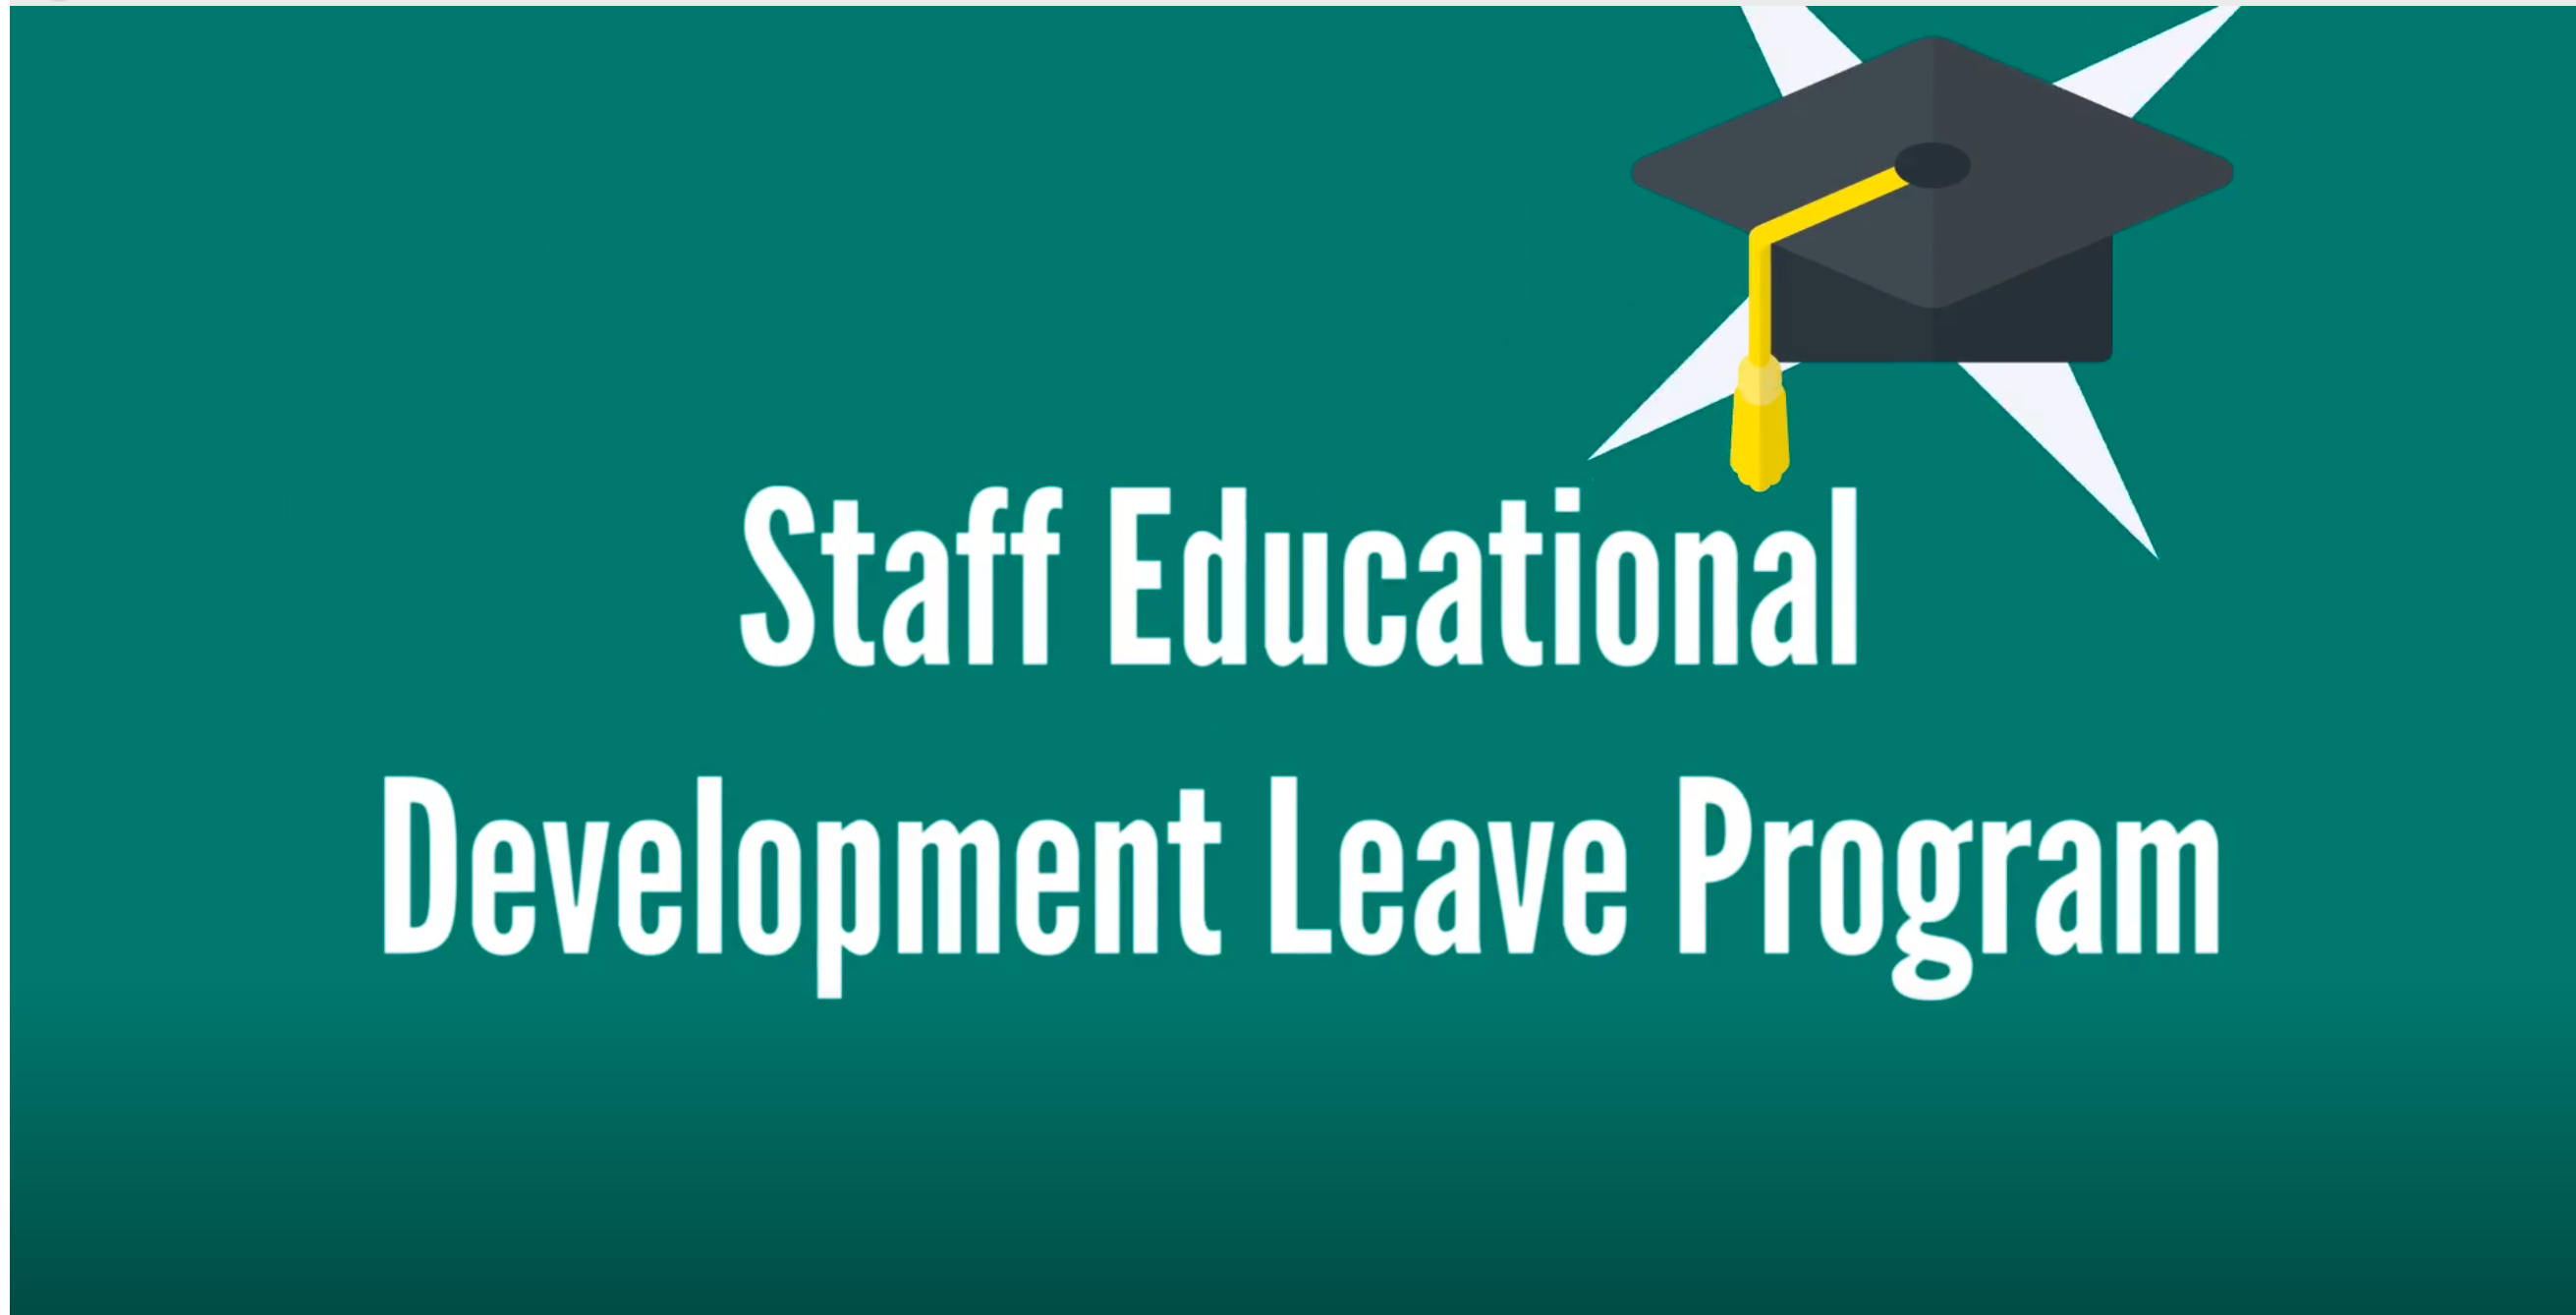 Staff Educational Development Leave Program